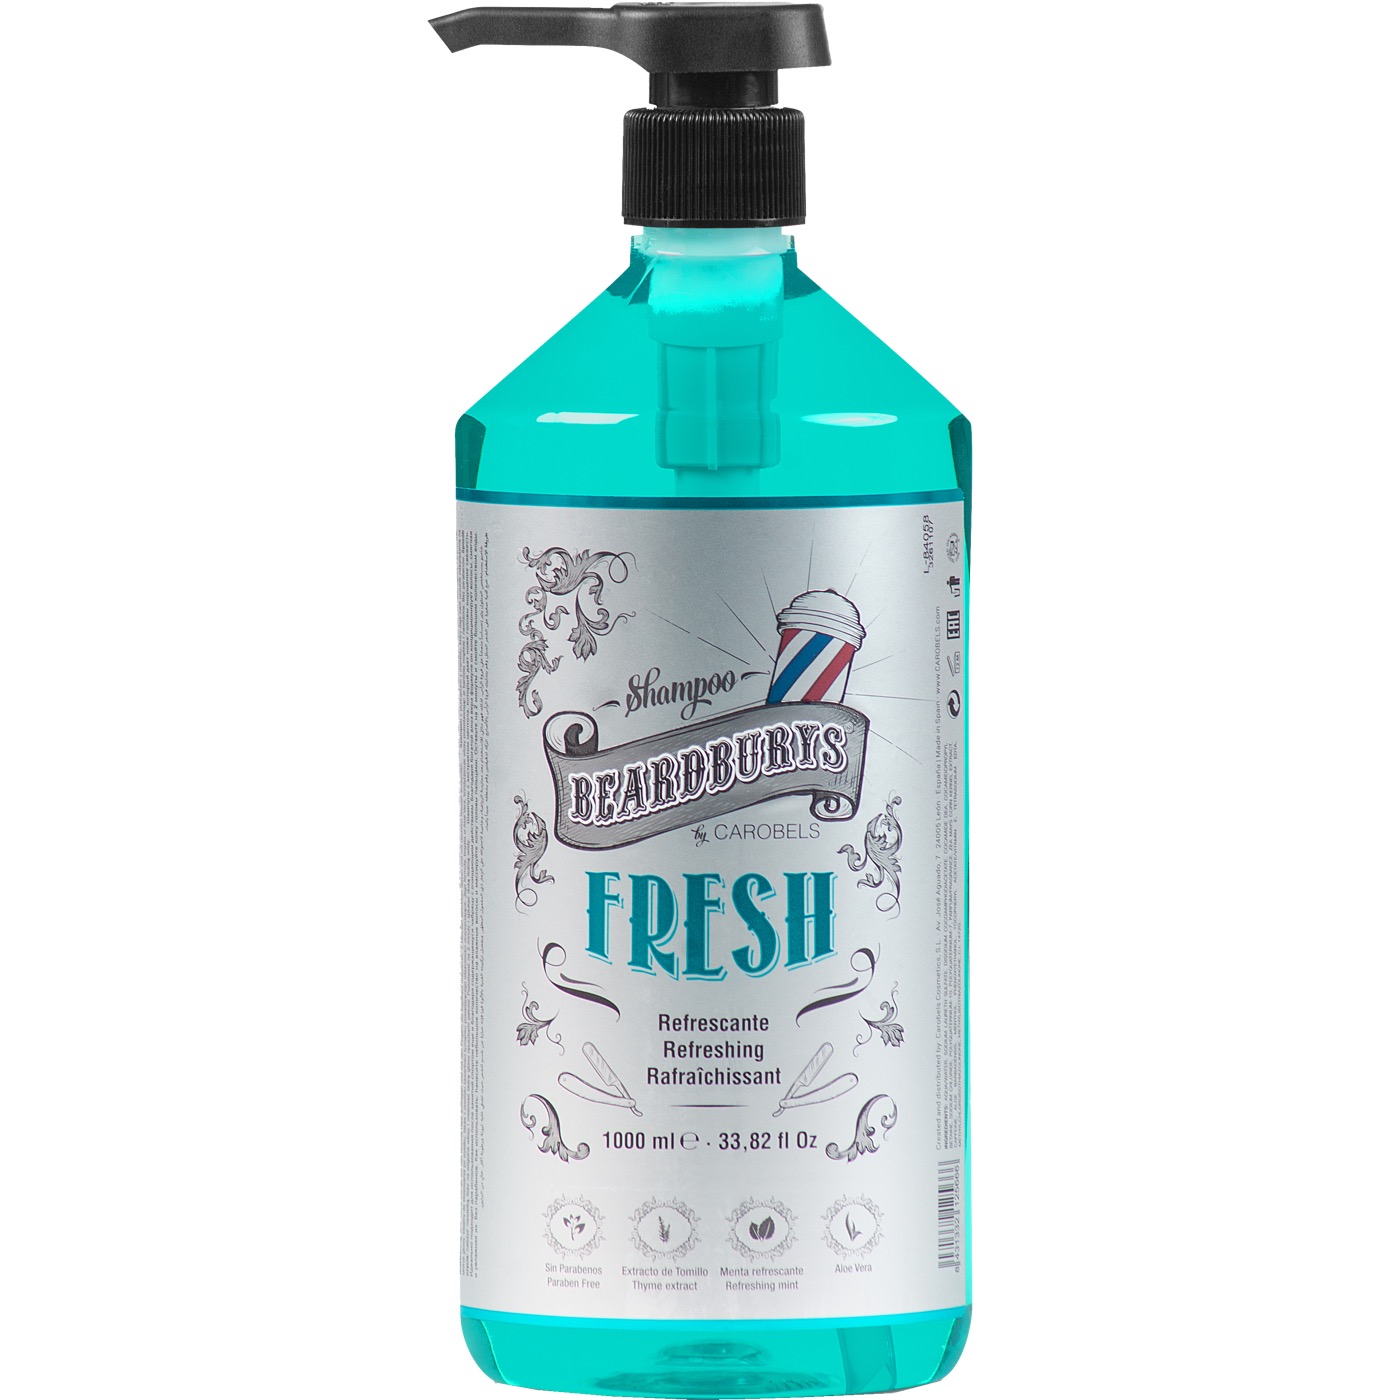 Beardburys Fresh Shampoo 1000ml - 1.1 - BB-0412566